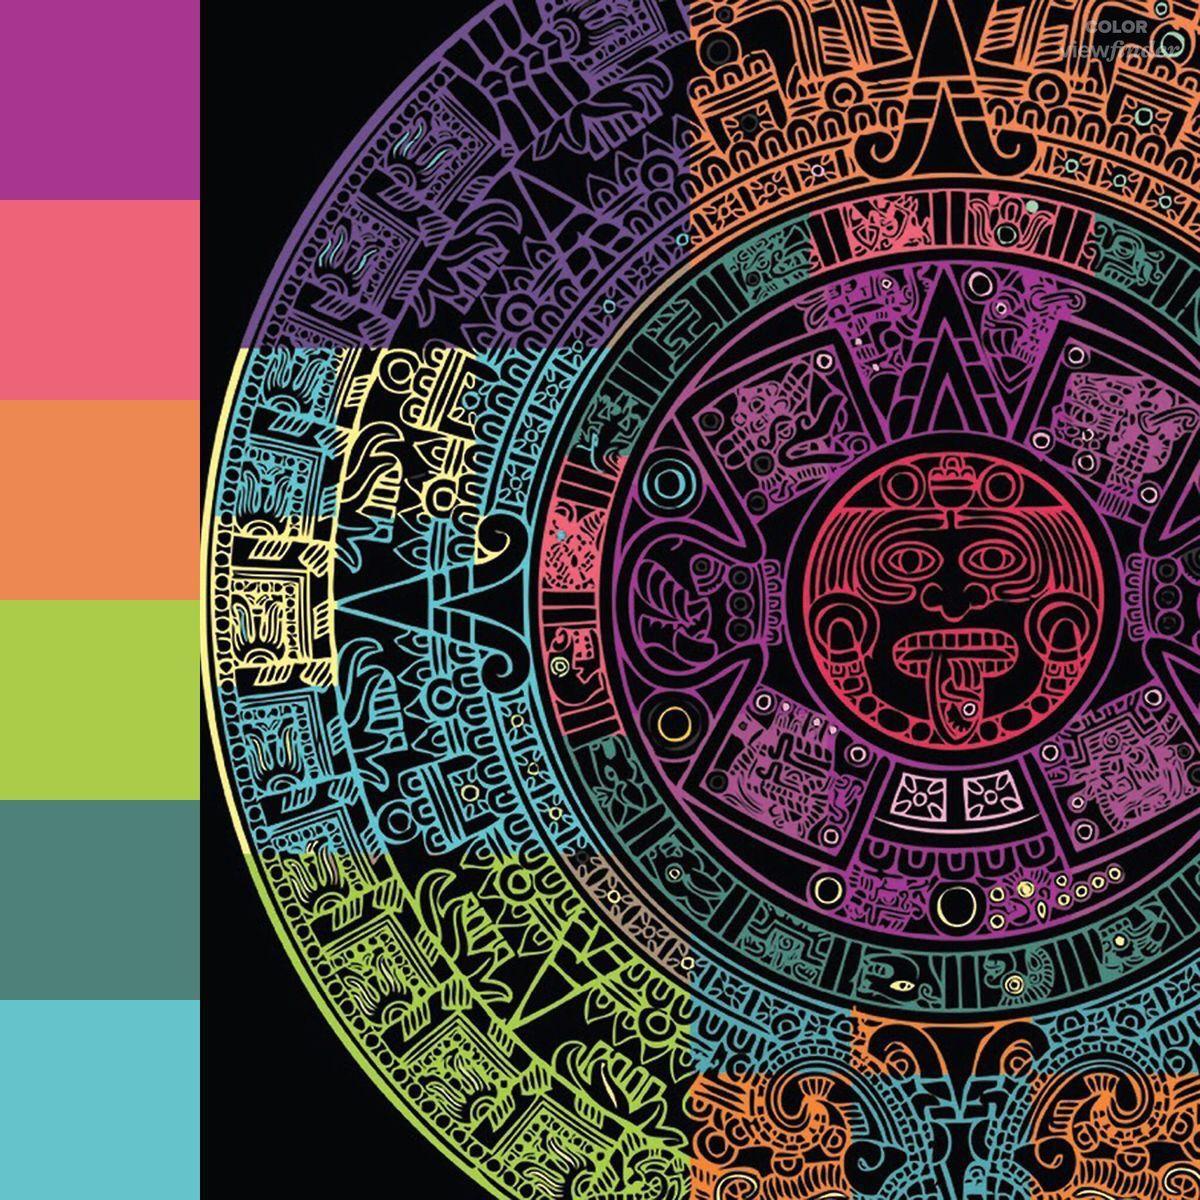 Calendario azteca, 69❤, colores. LIFE STYLE FREE